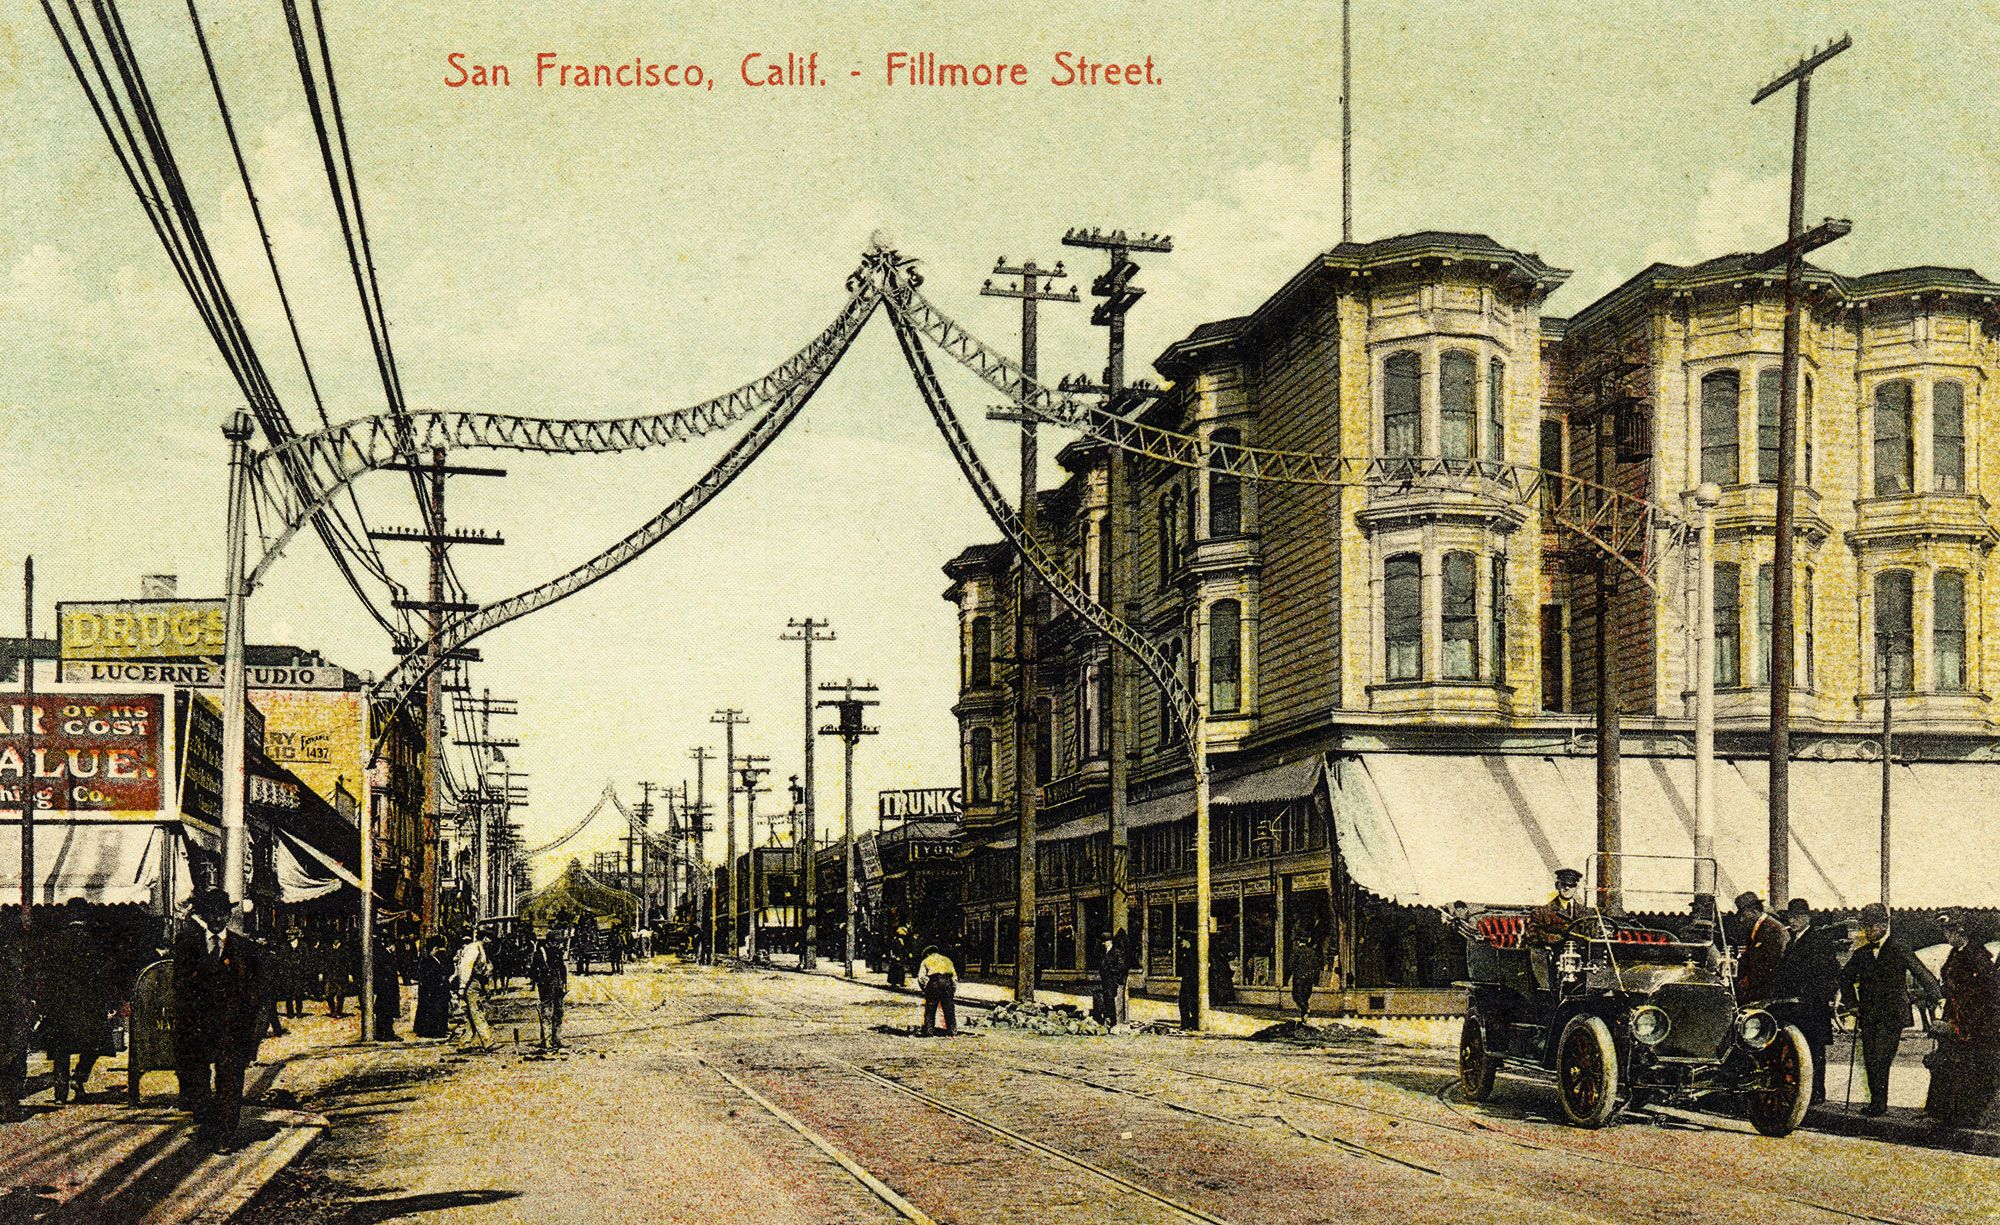 Postcard image of Fillmore Street